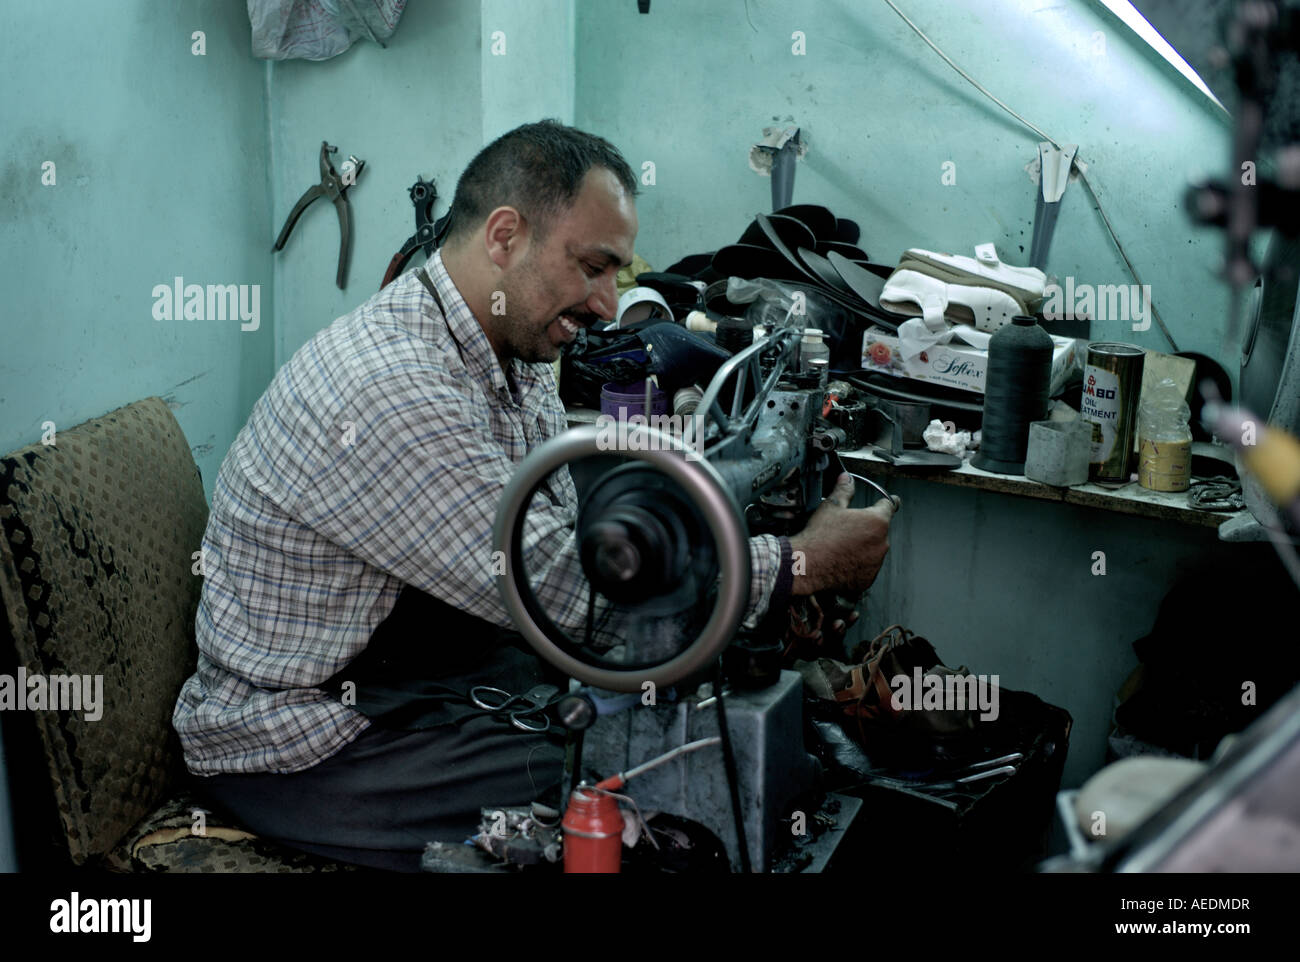 Man in petra shop mending shoes Stock Photo